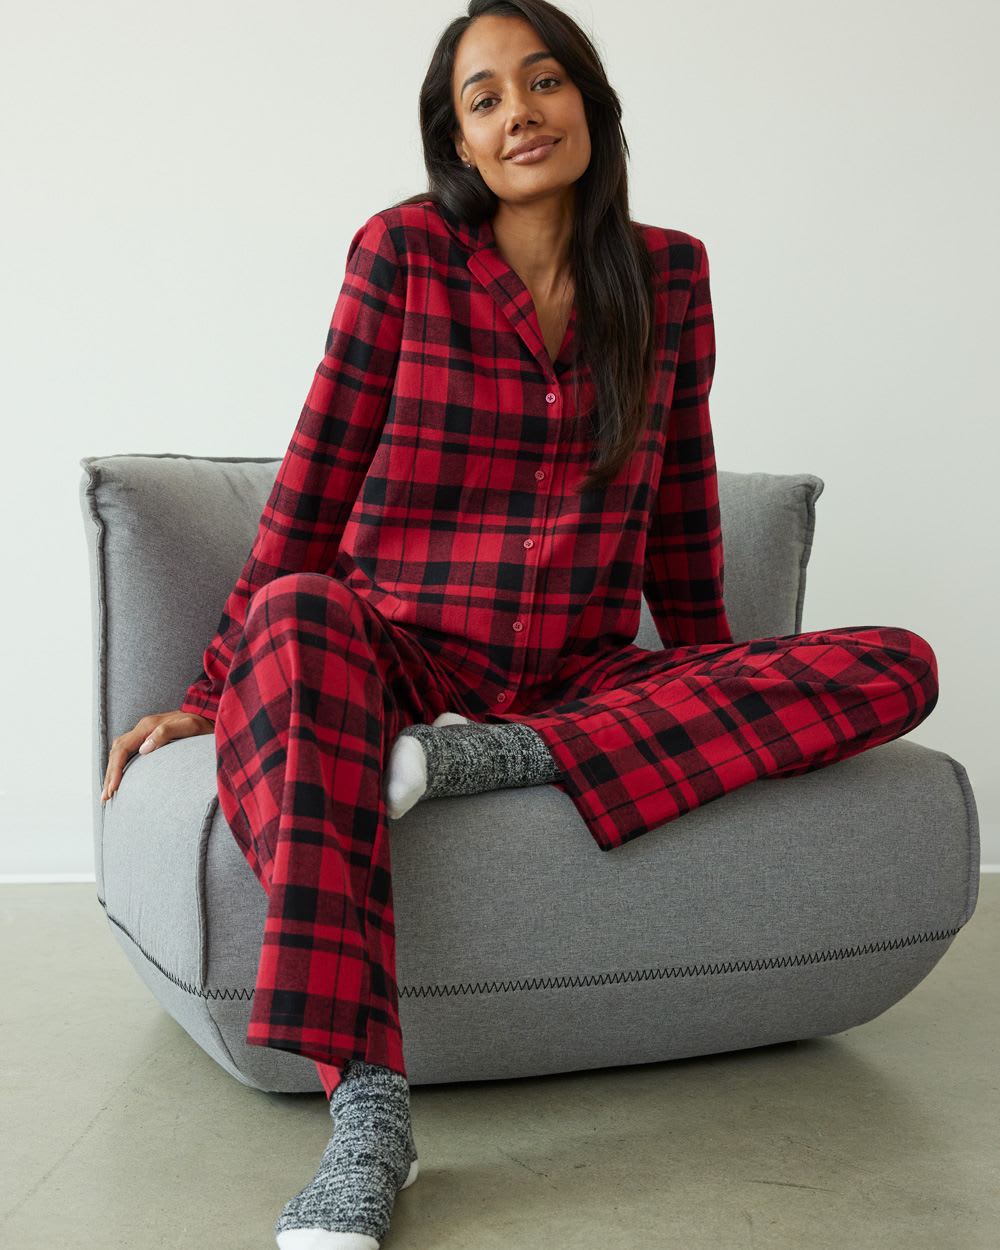 Long-Sleeve Top and Straight-Leg Pant Flannel Pyjama Set